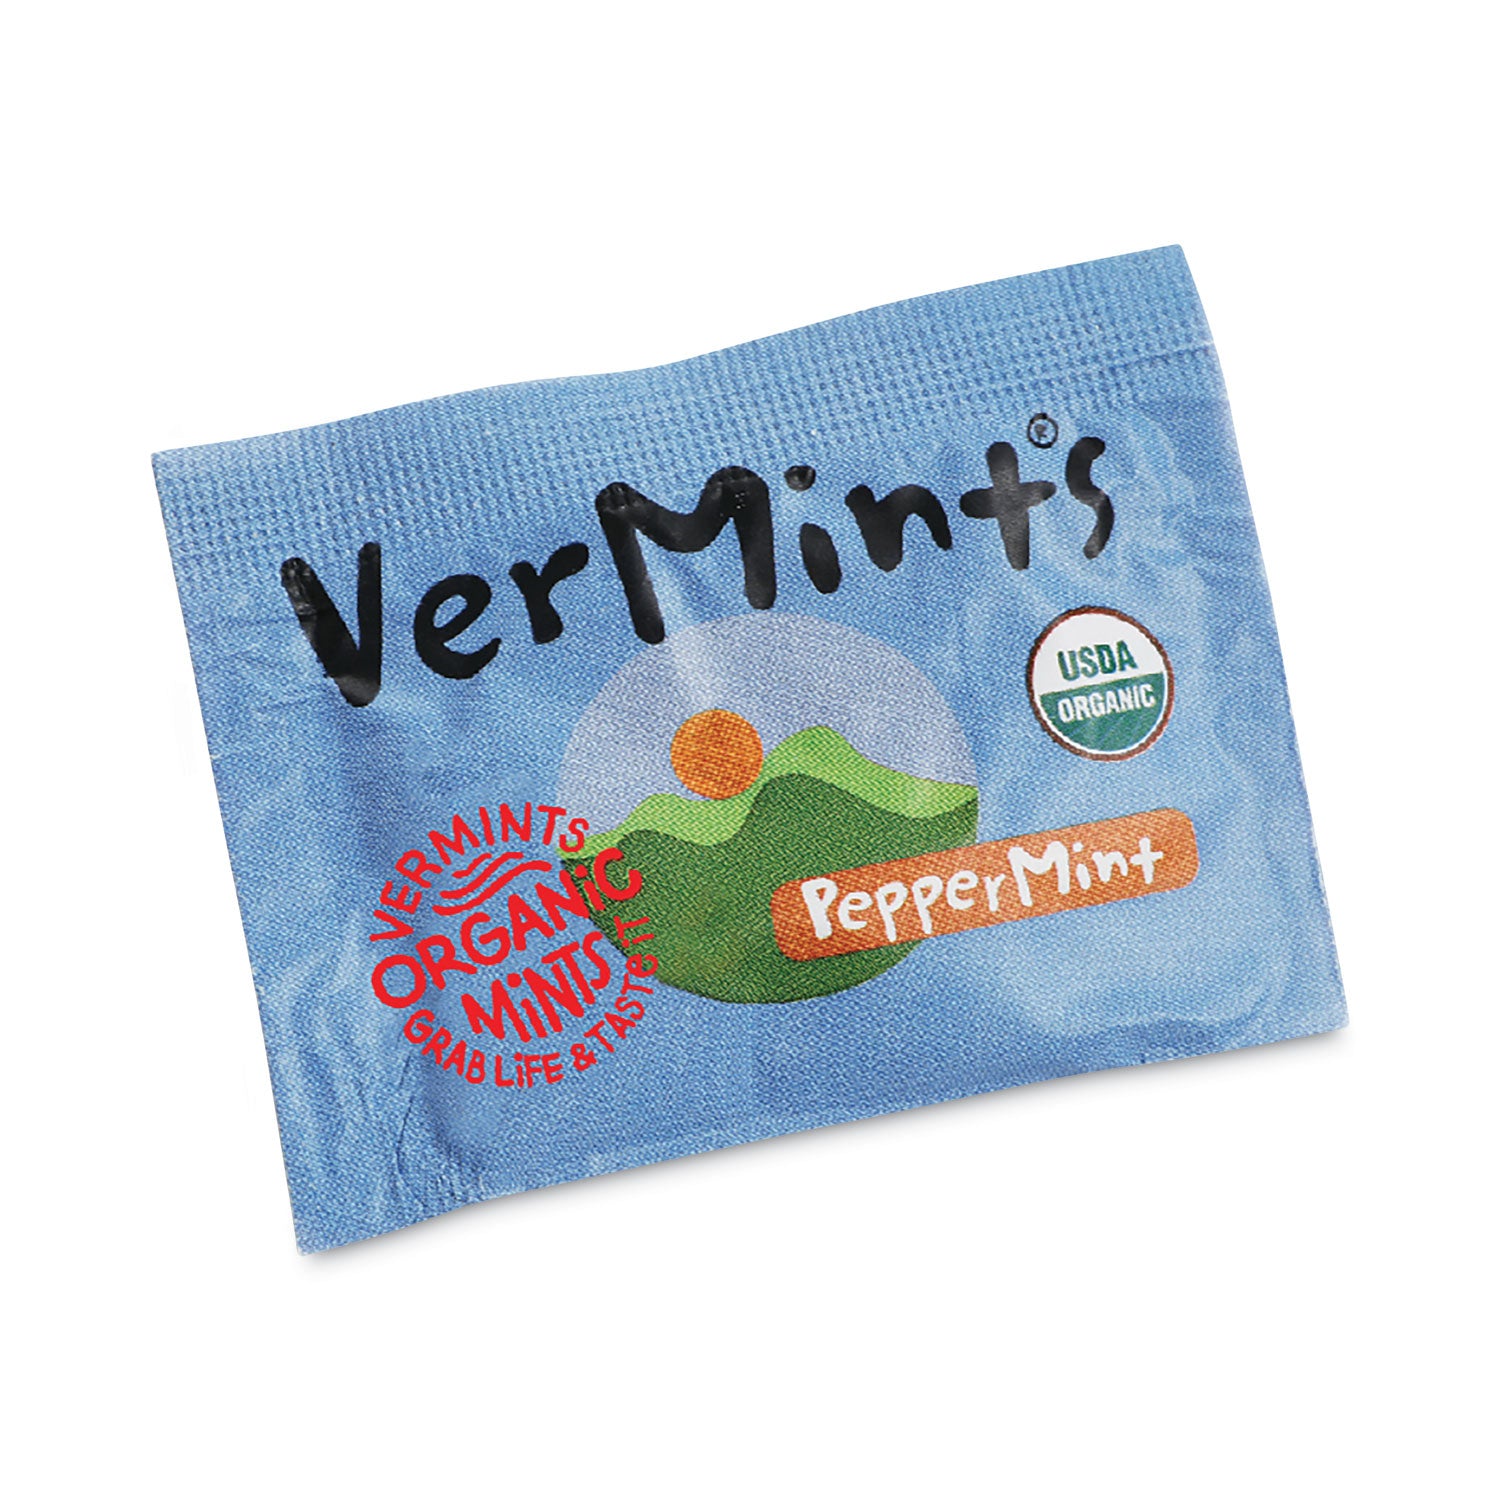 vermints-organic-mints-pastilles-peppermint-2-mints-07-oz-individually-wrapped-100-box_vemvnt00992 - 1